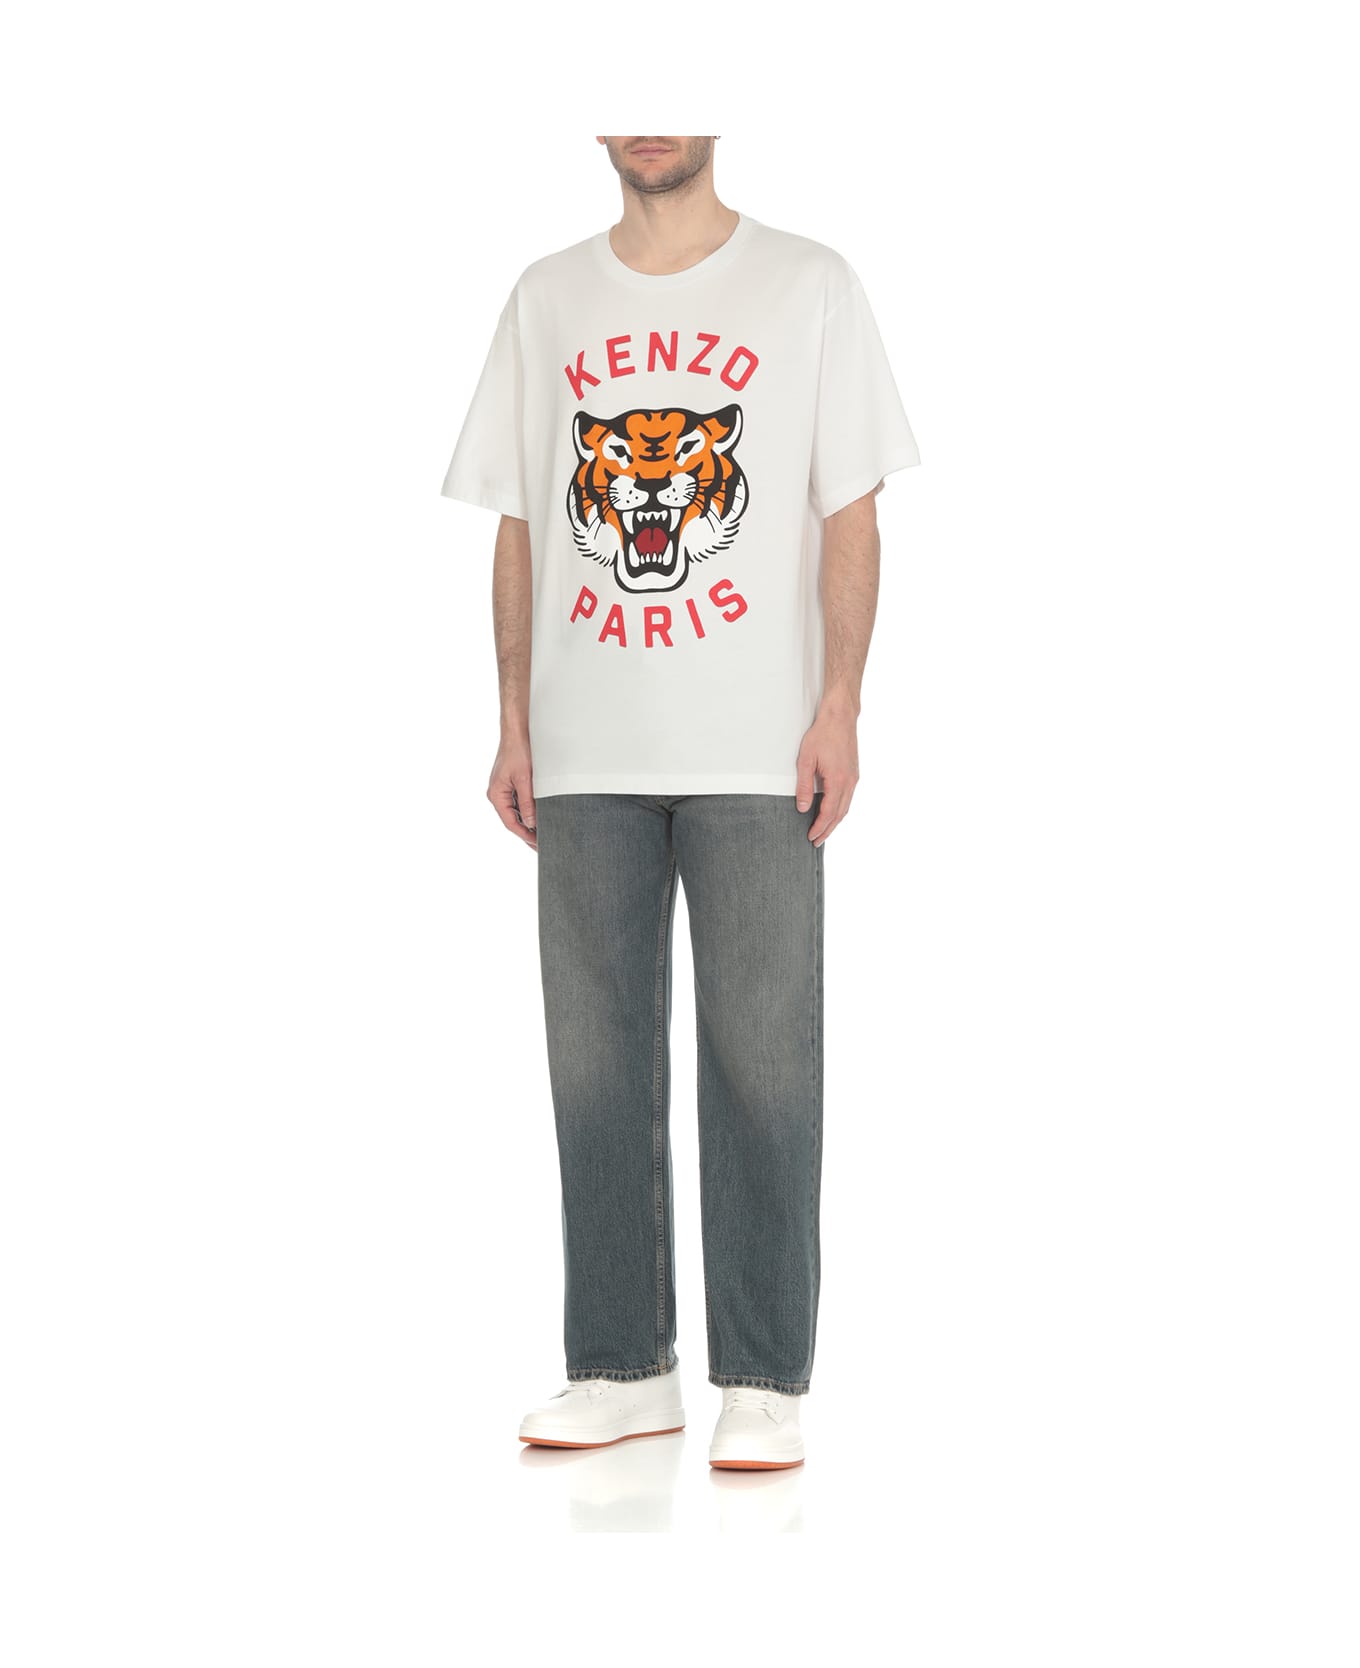 Kenzo Lucky Tiger T-shirt - White